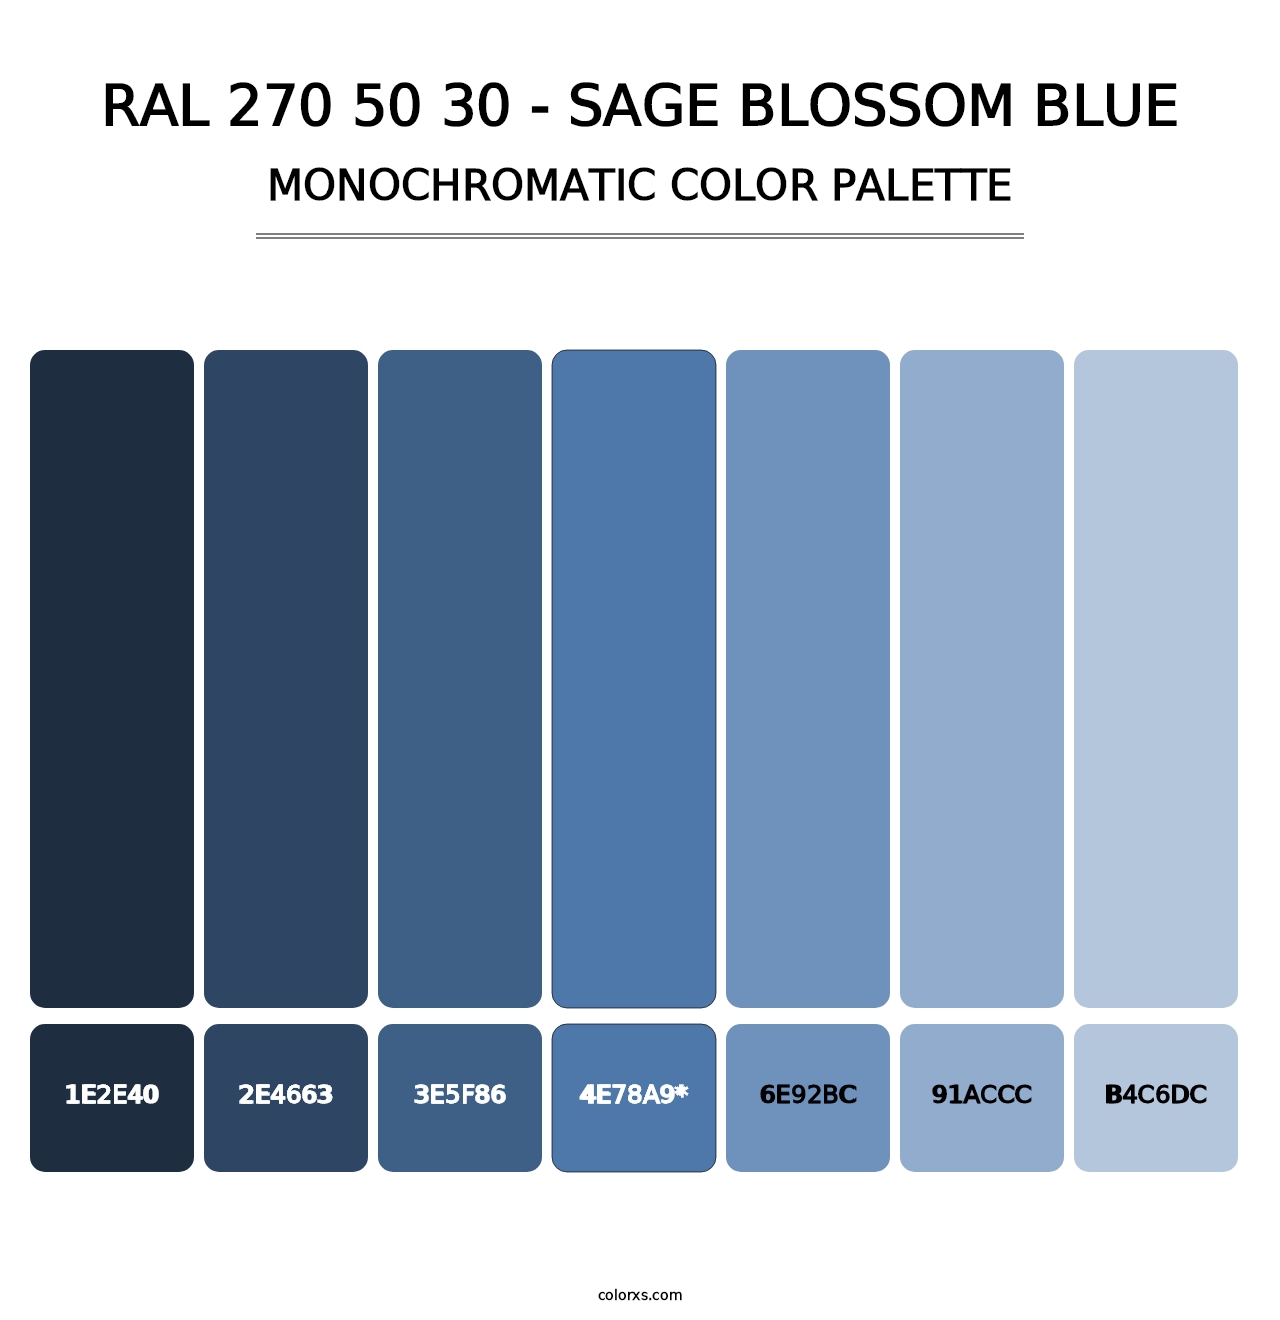 RAL 270 50 30 - Sage Blossom Blue - Monochromatic Color Palette